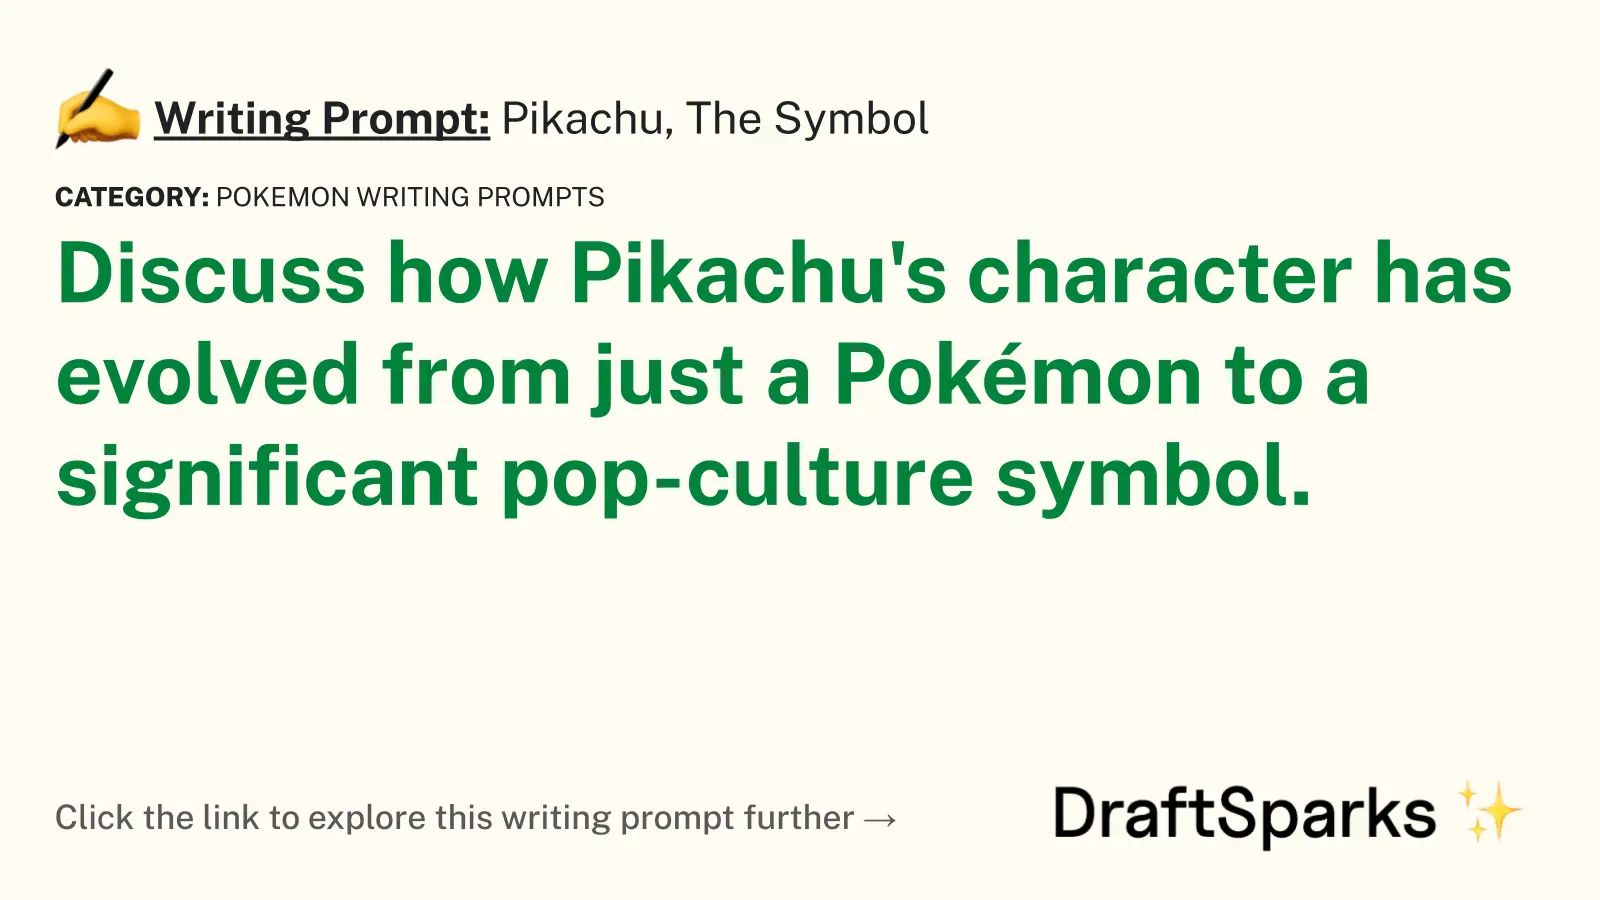 Pikachu, The Symbol